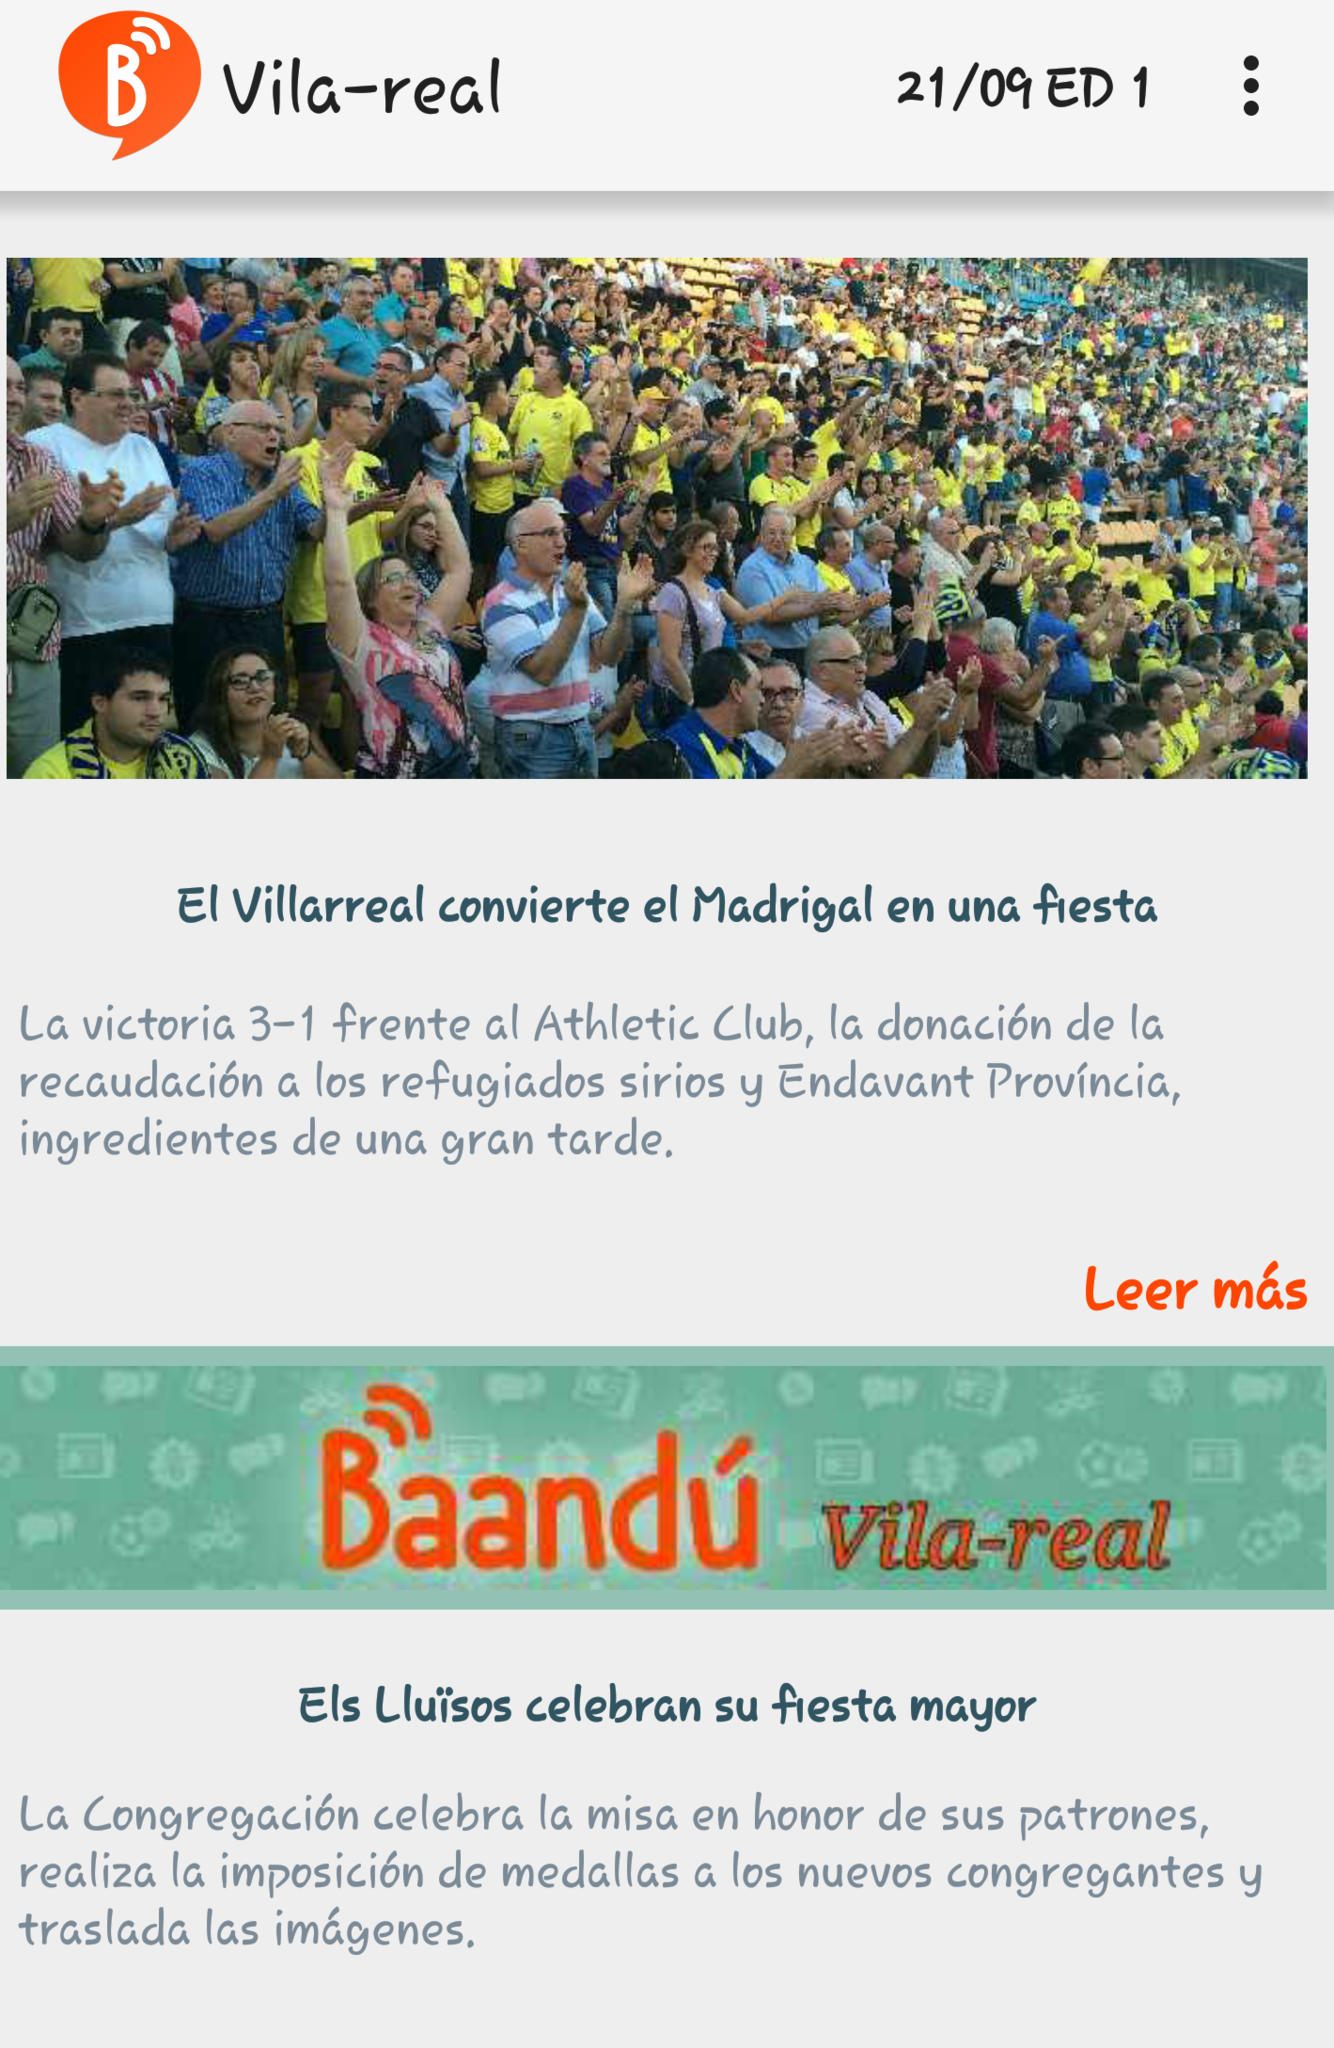 Baand llega a Vila-real y ya publica en 6 localidades